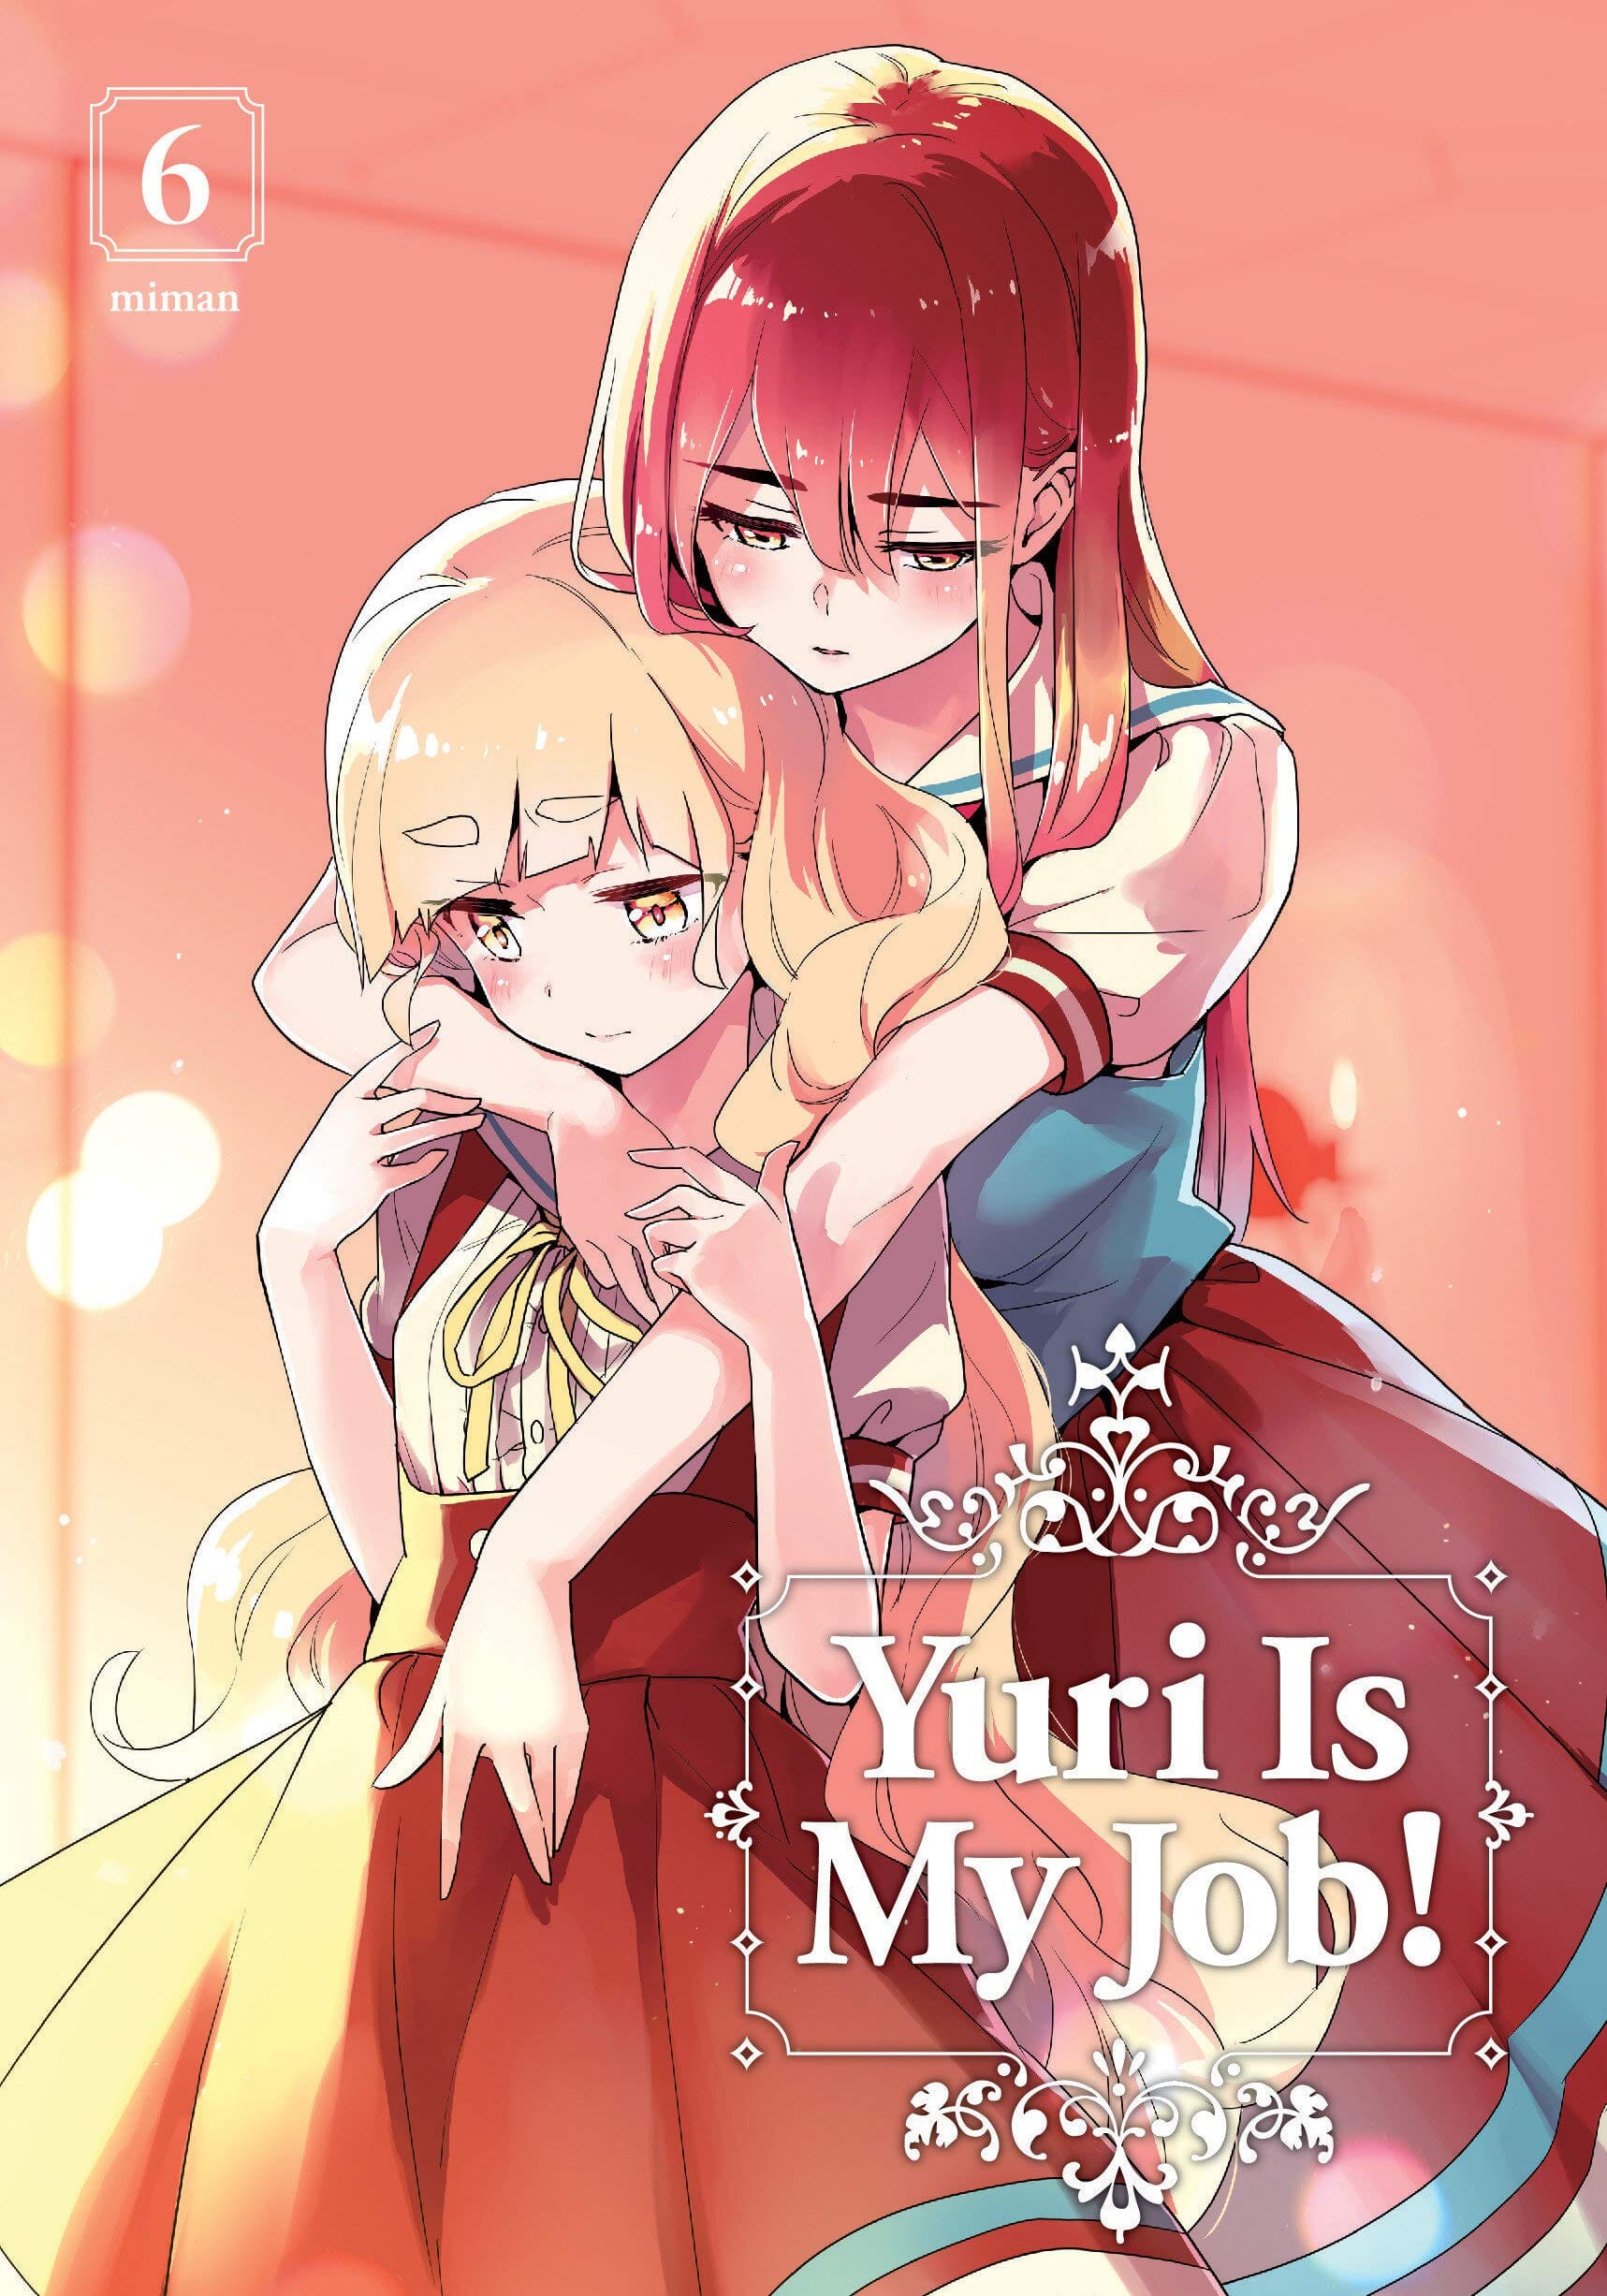 Yuri is my job! vol. 6 Manga Multizone: Comics And Games  | Multizone: Comics And Games